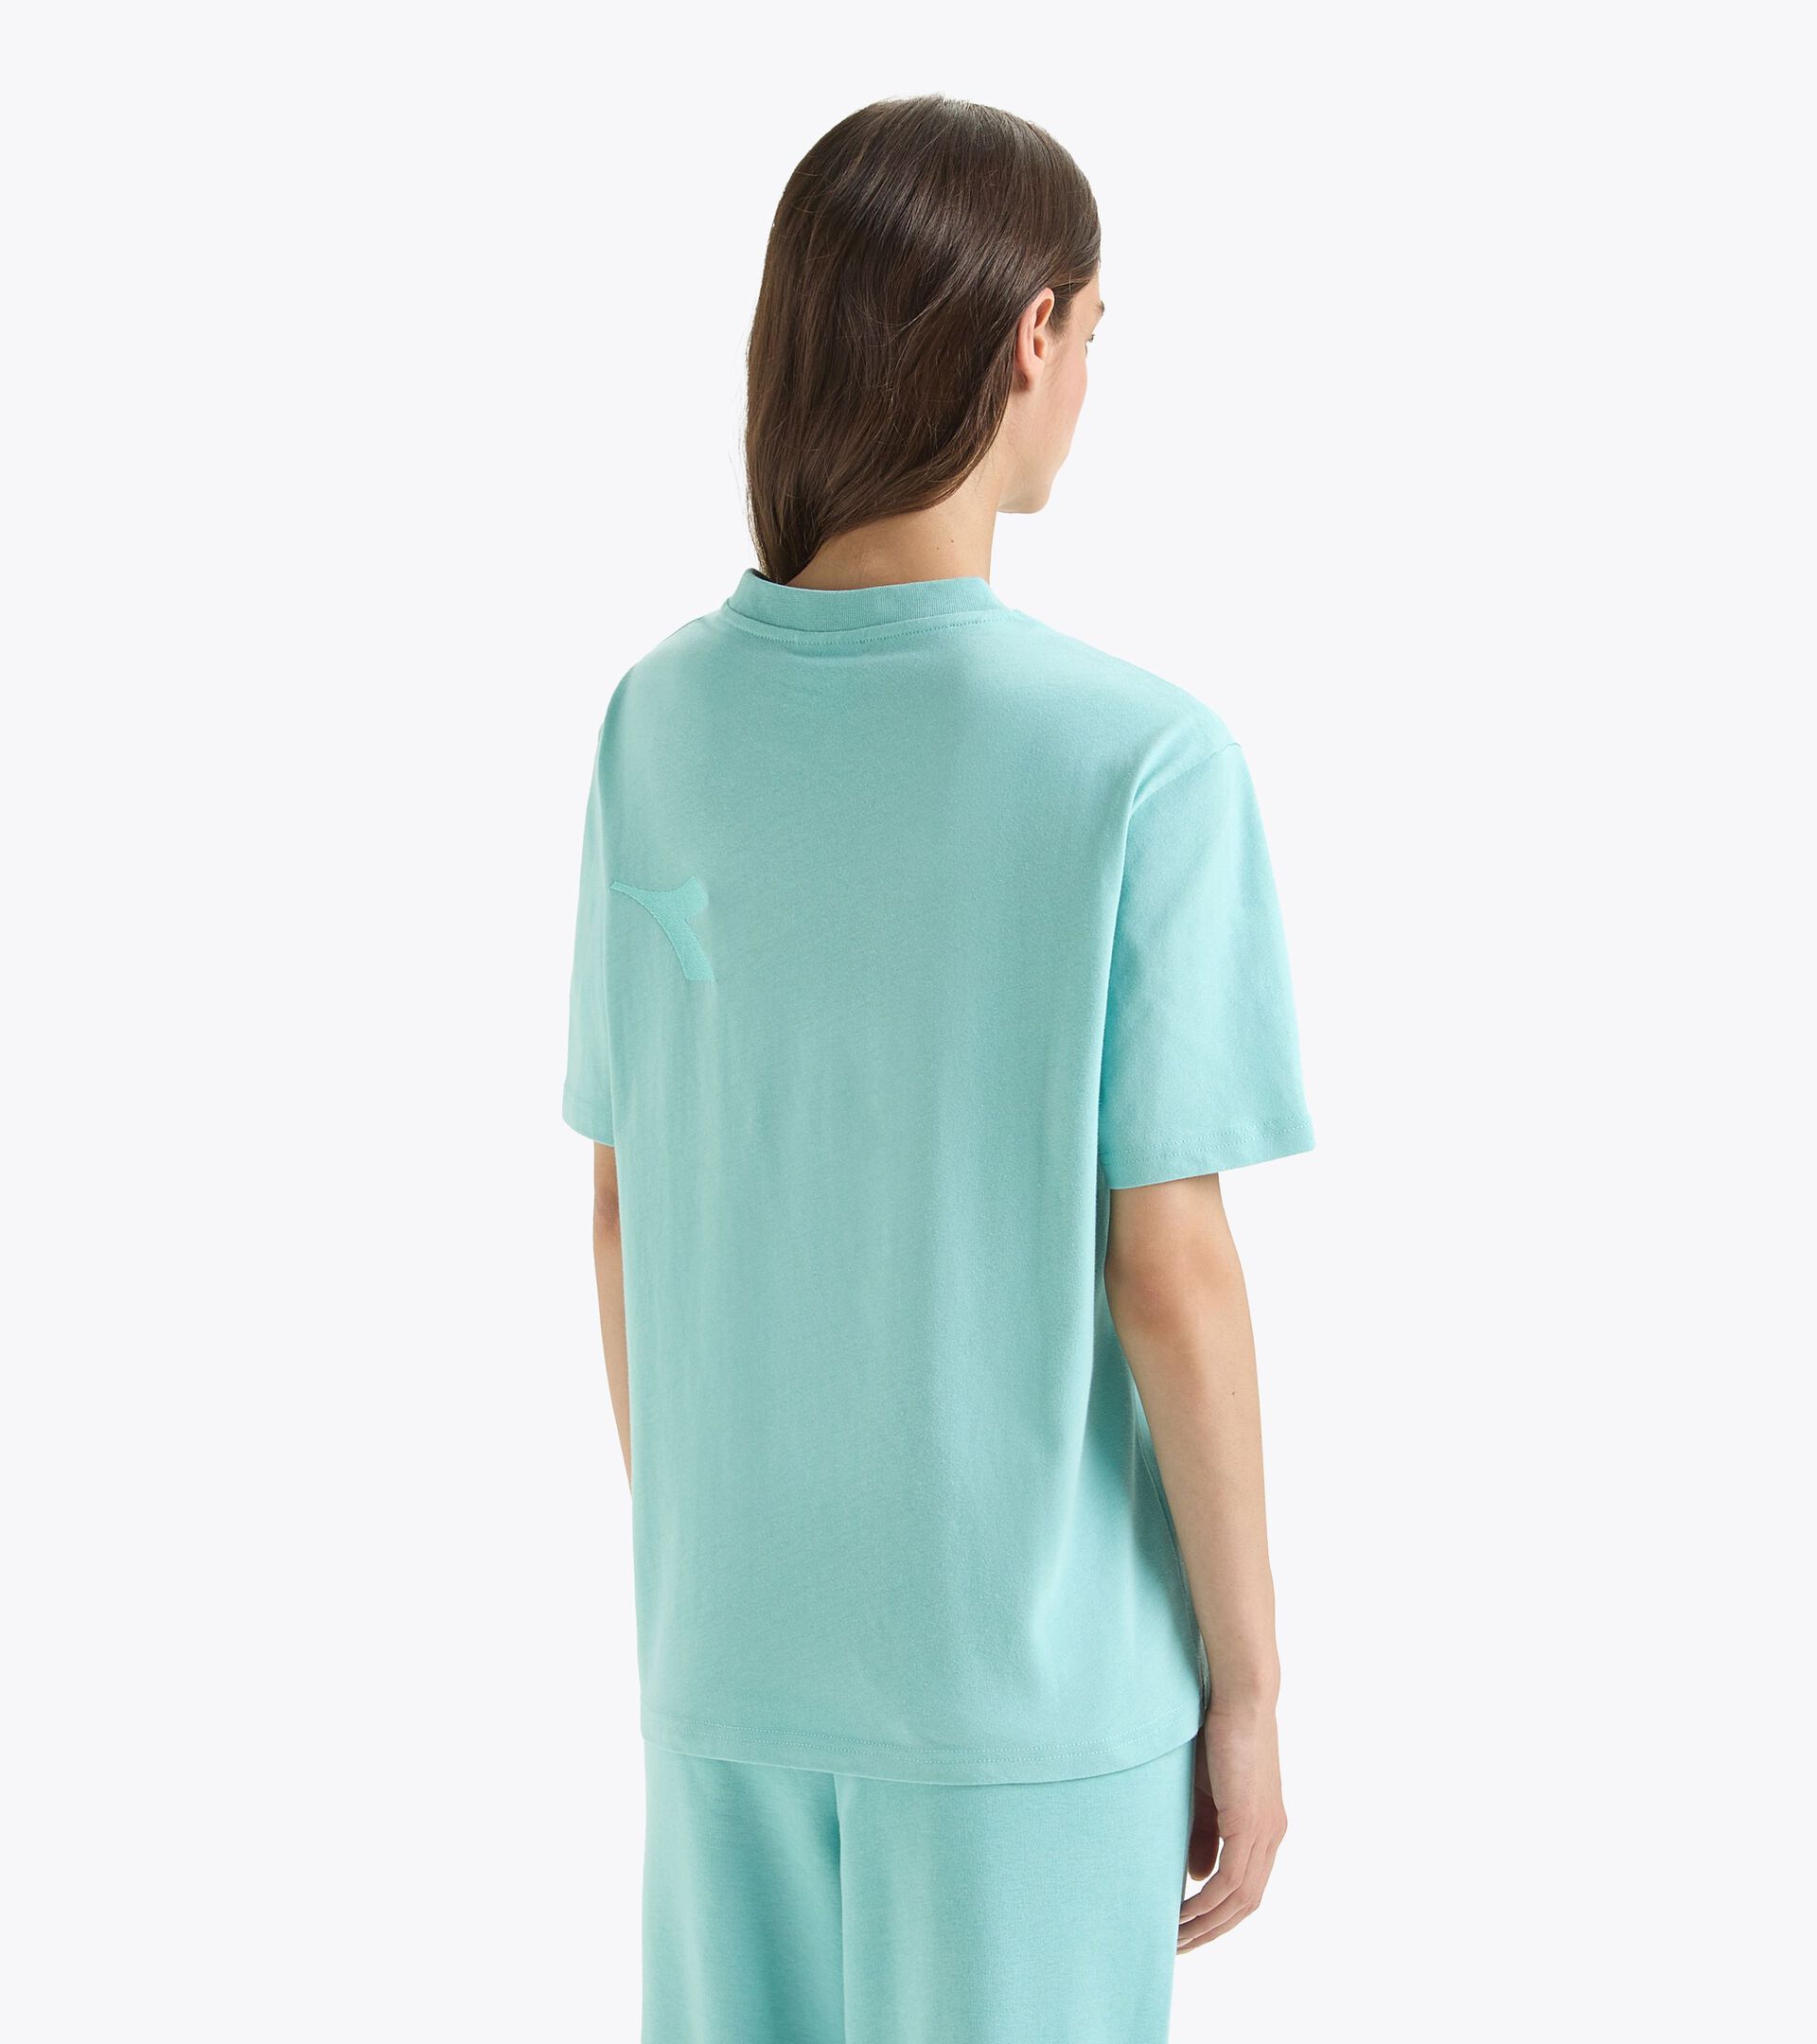 T-shirt - Gender Neutral T-SHIRT SS ATHL. LOGO TURQUOISE   (65135) - Diadora